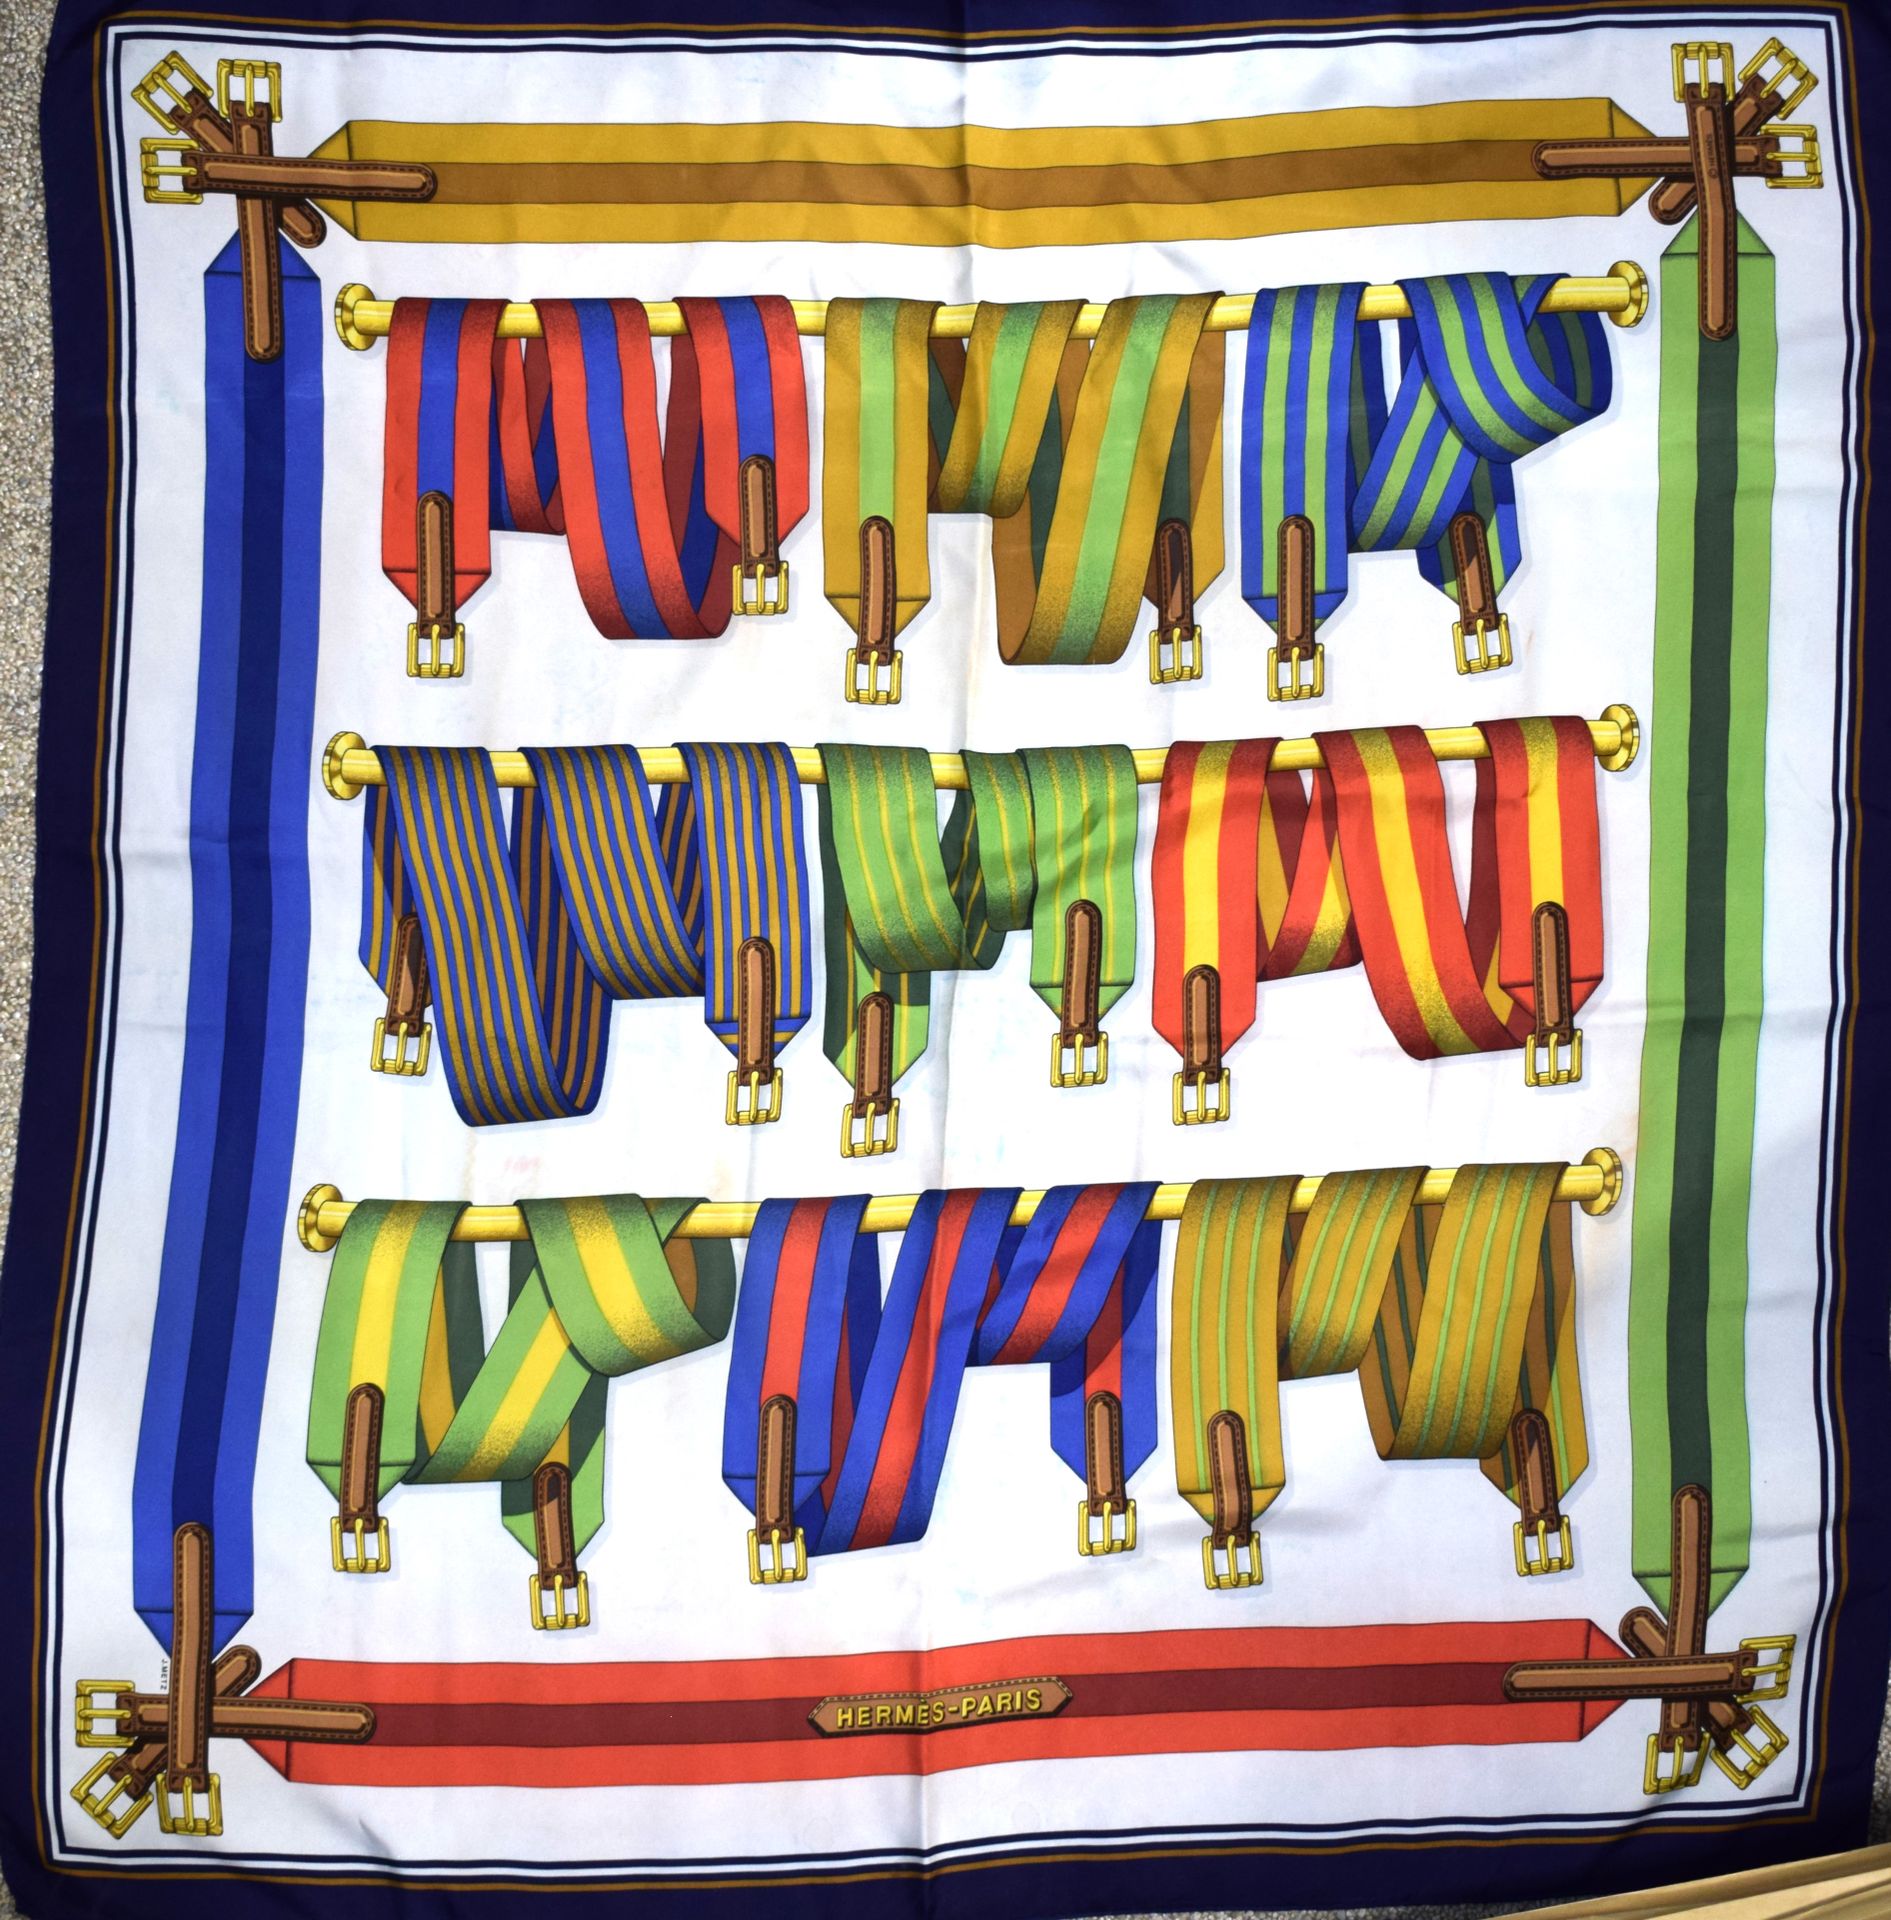 Null 爱马仕
围巾型号：Les Sangles 
丝绸方形
发布日期：1985年
设计师：Joachim Metz
90 x 90厘米
无盒
(有些污渍)